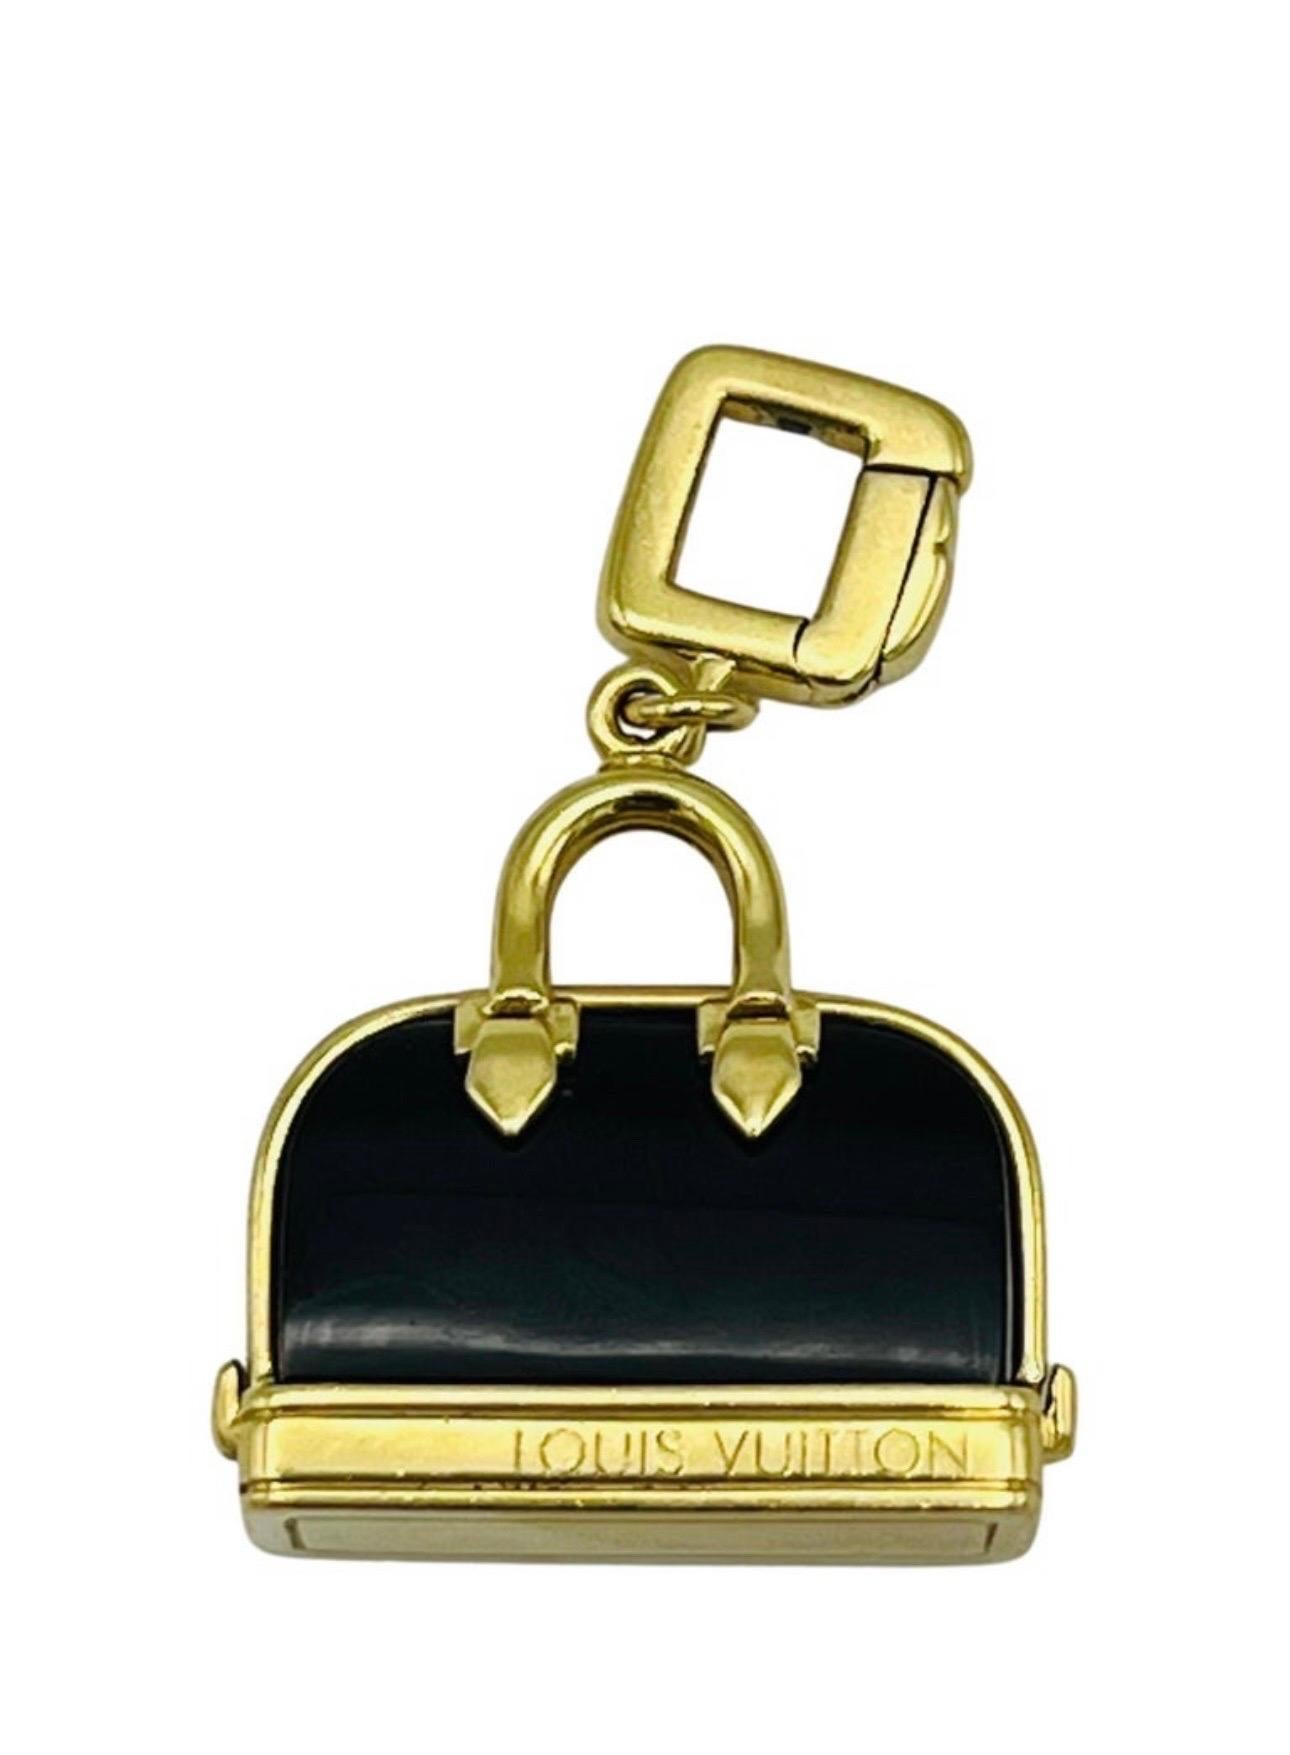 Louis Vuitton Padlock & Keys+ Two Bags Charm Yellow Gold Bracelet 125.7 Gm 18 KG For Sale 3